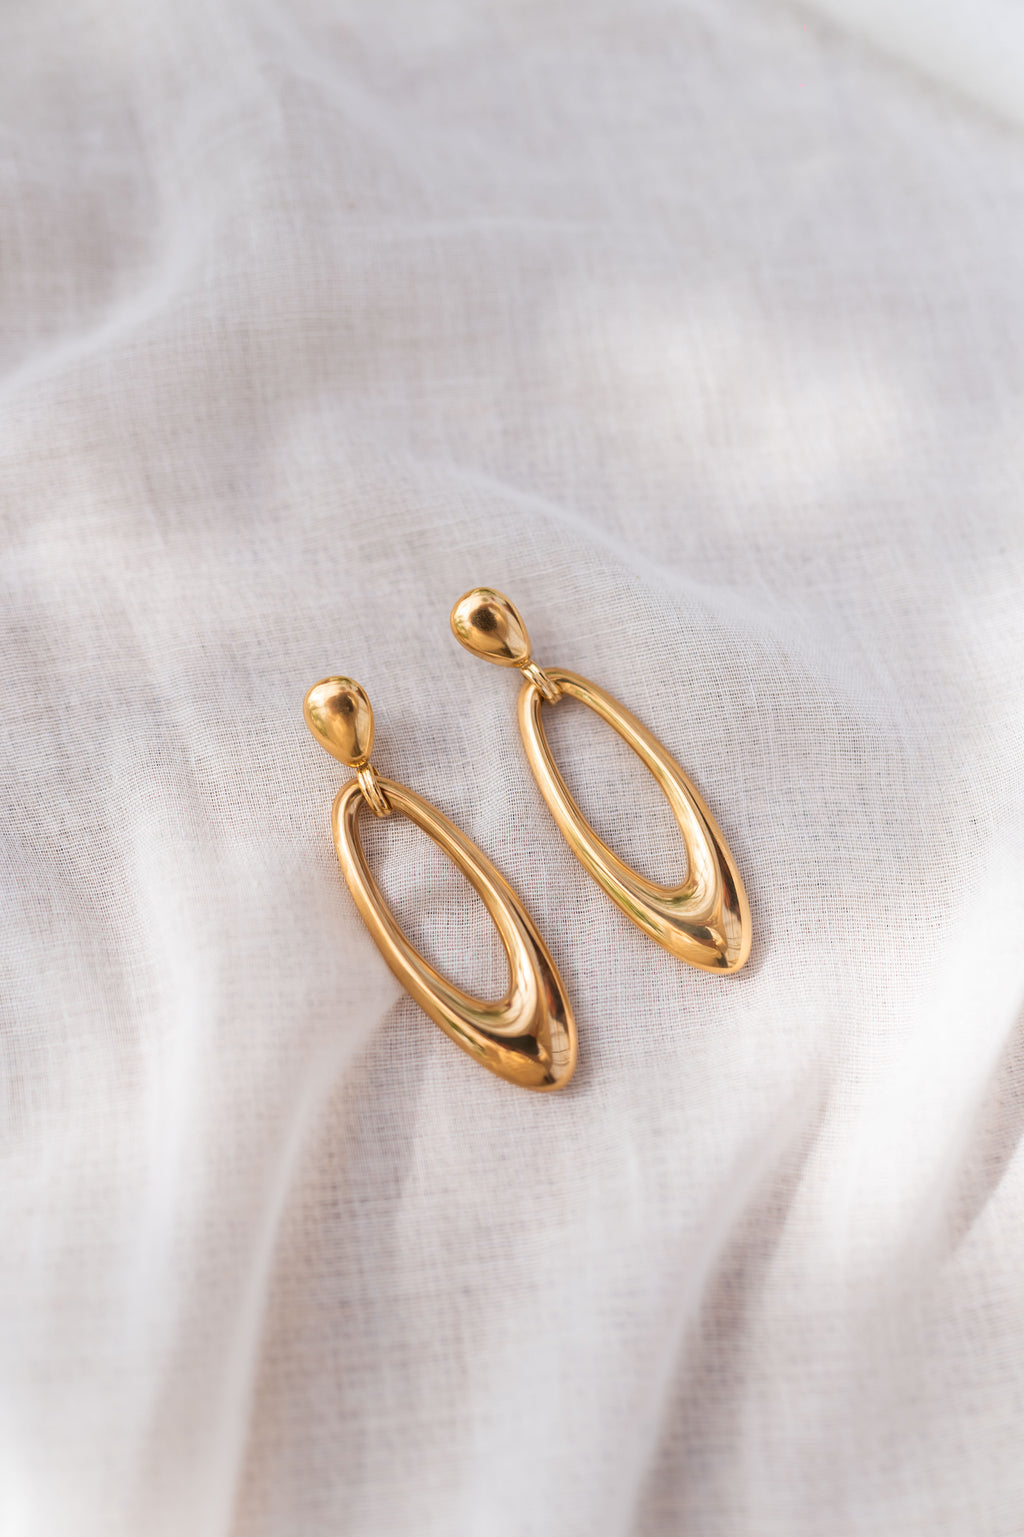 Pietro earrings - golden